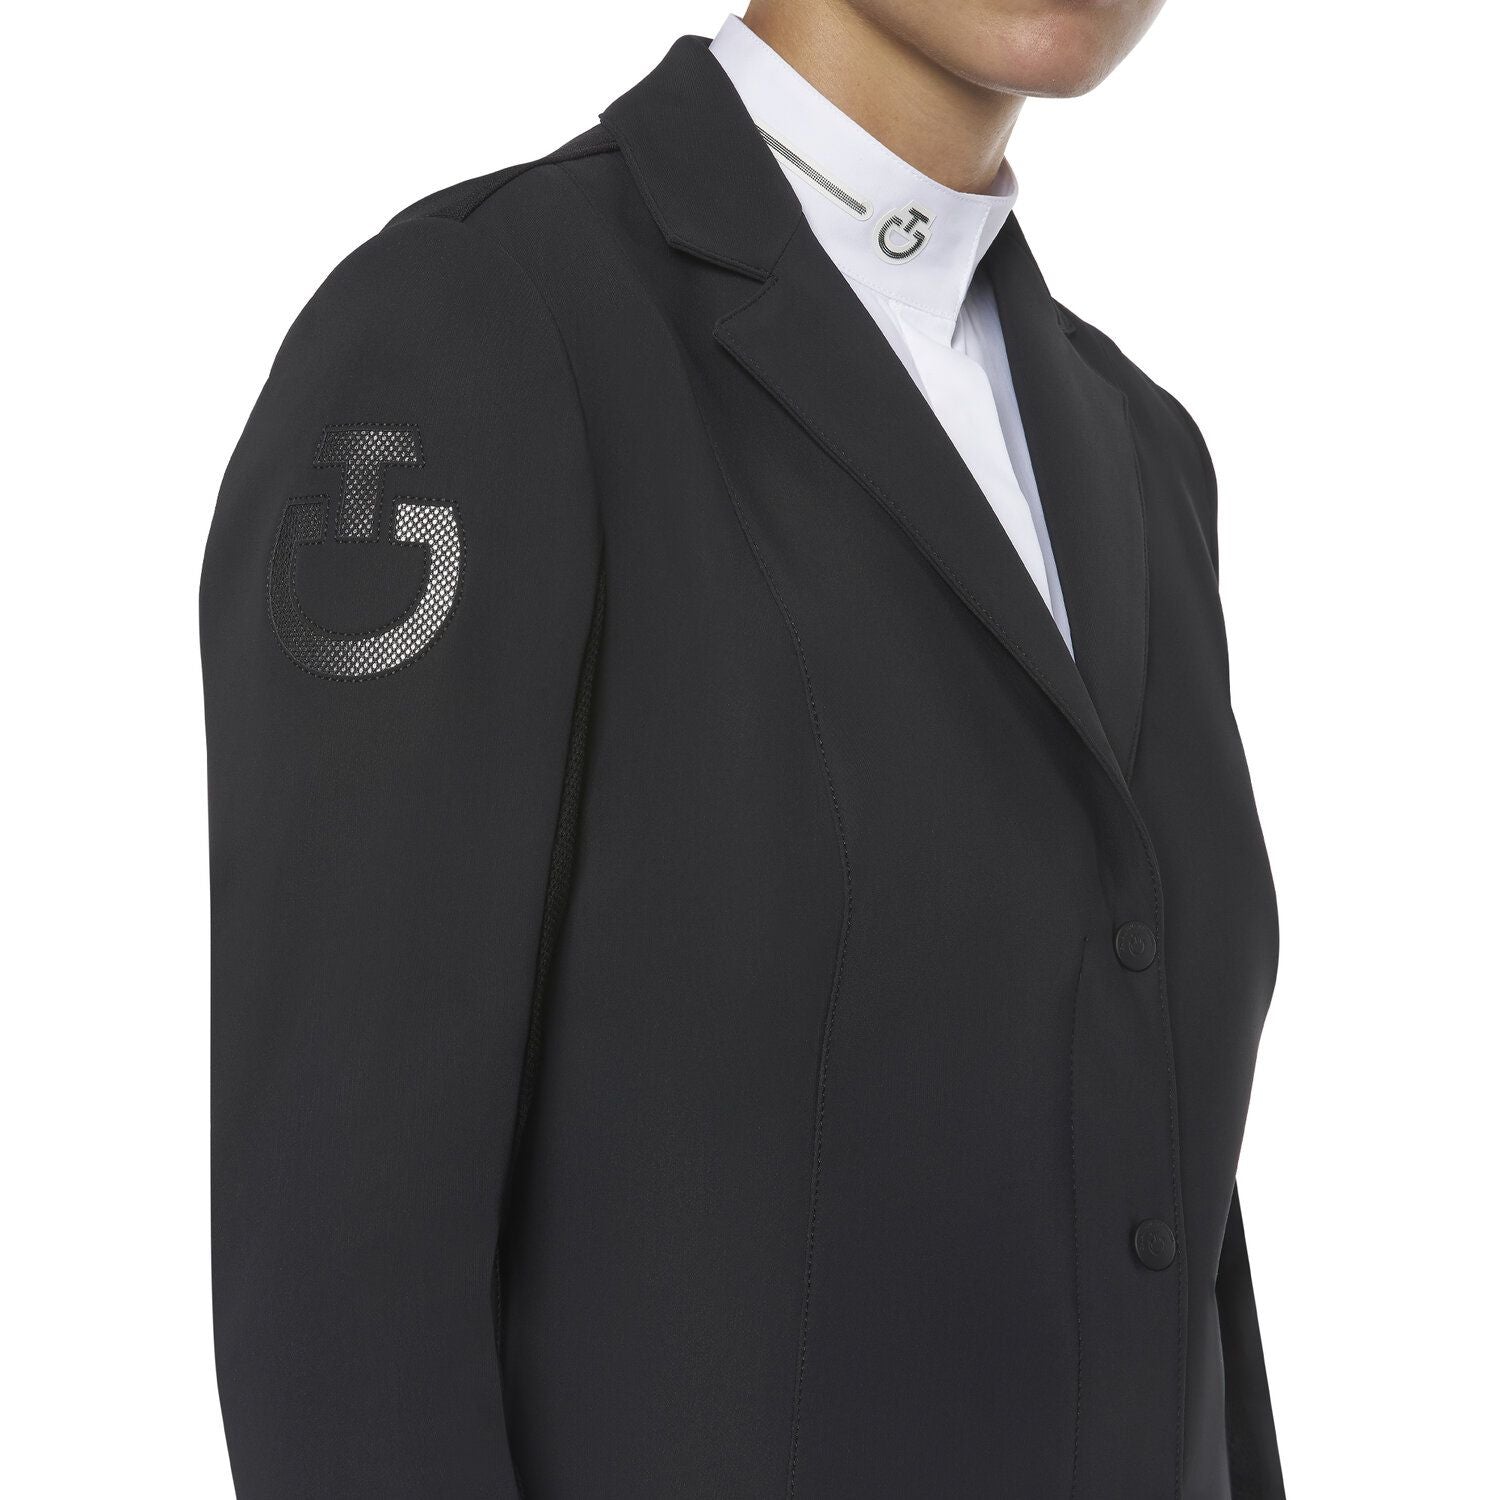 product shot image of the Ladies R-Evo Light Tech Knit Zip Riding Jacket - Black